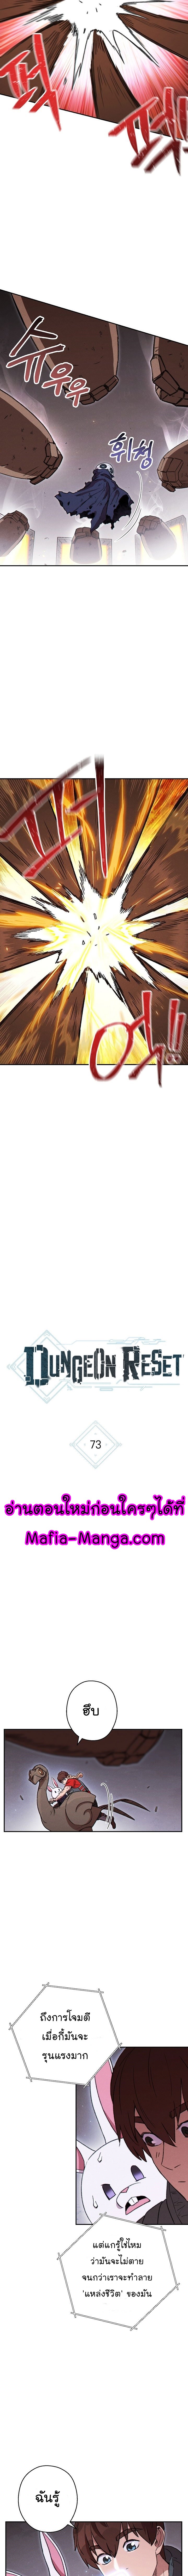 Dungeon Reset73 02